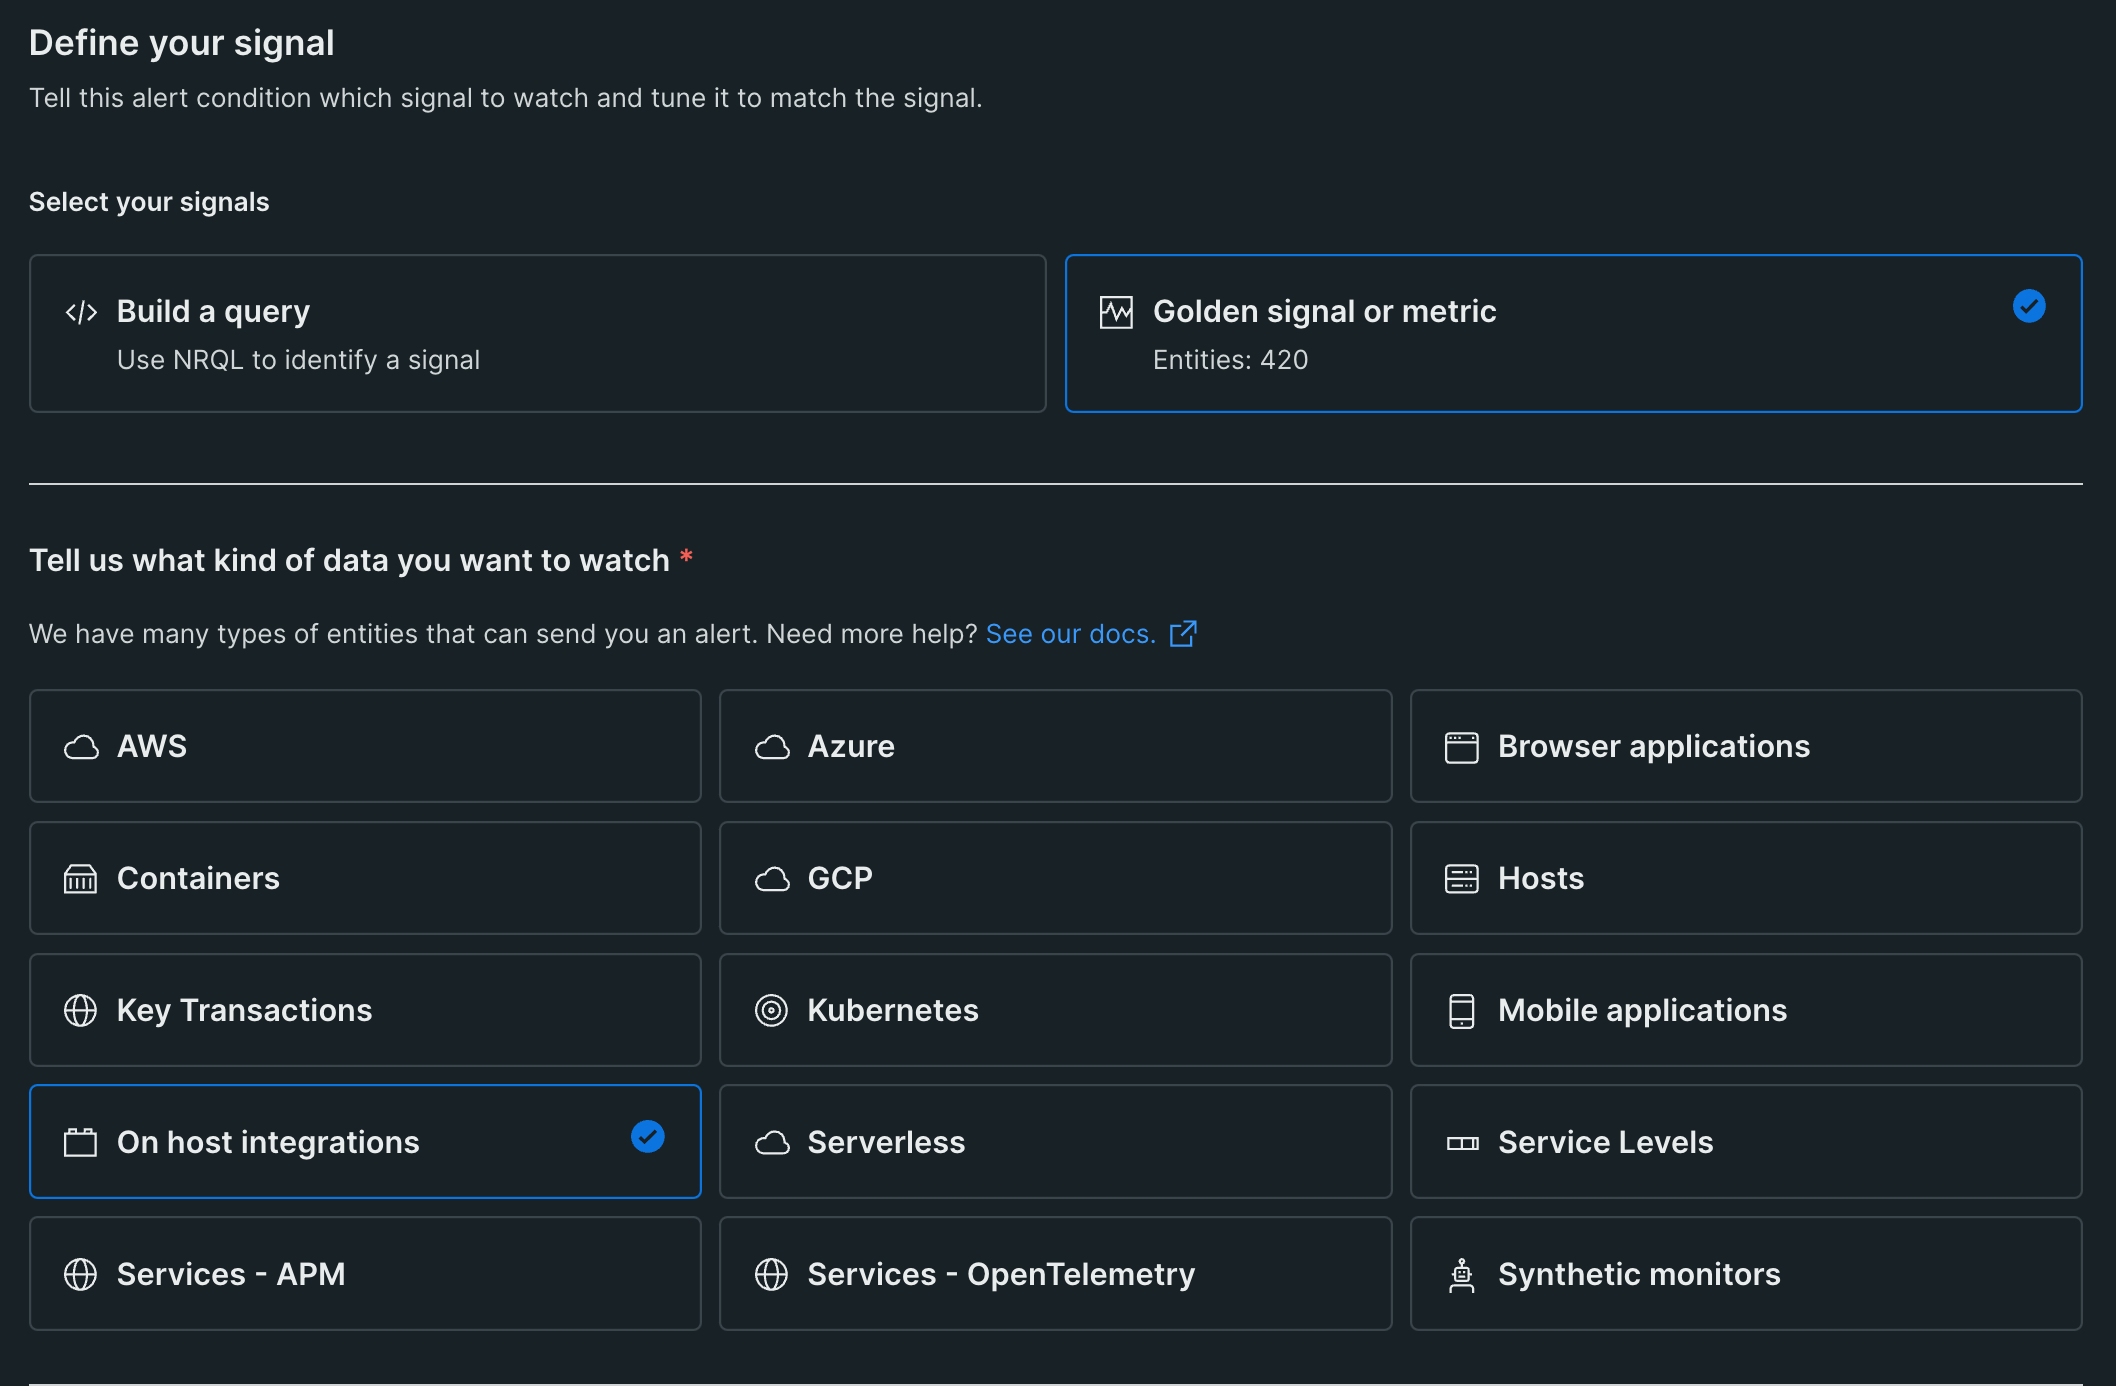 A screenshot displaying the golden metrics alert creation option